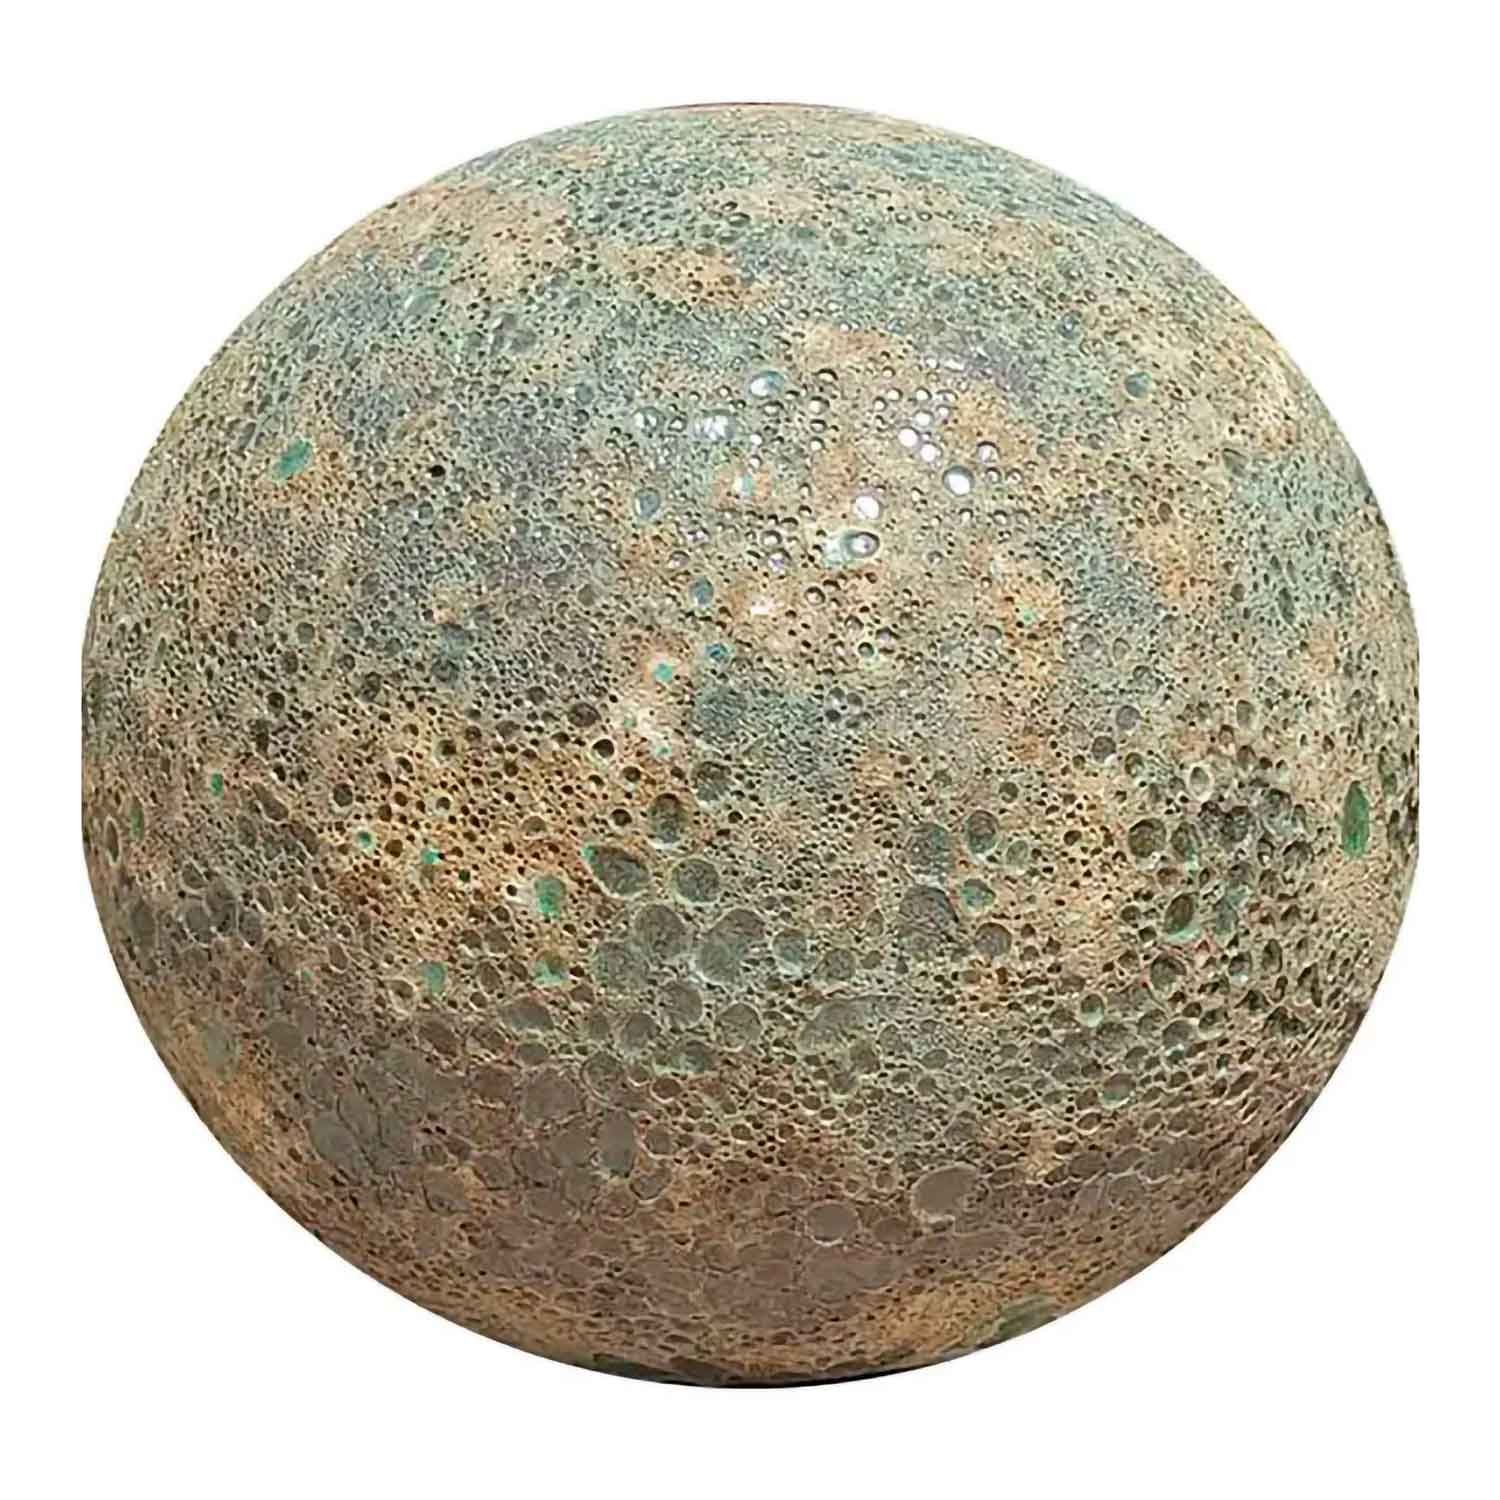 Deco Ball - Atlantic Green - Ø10cm